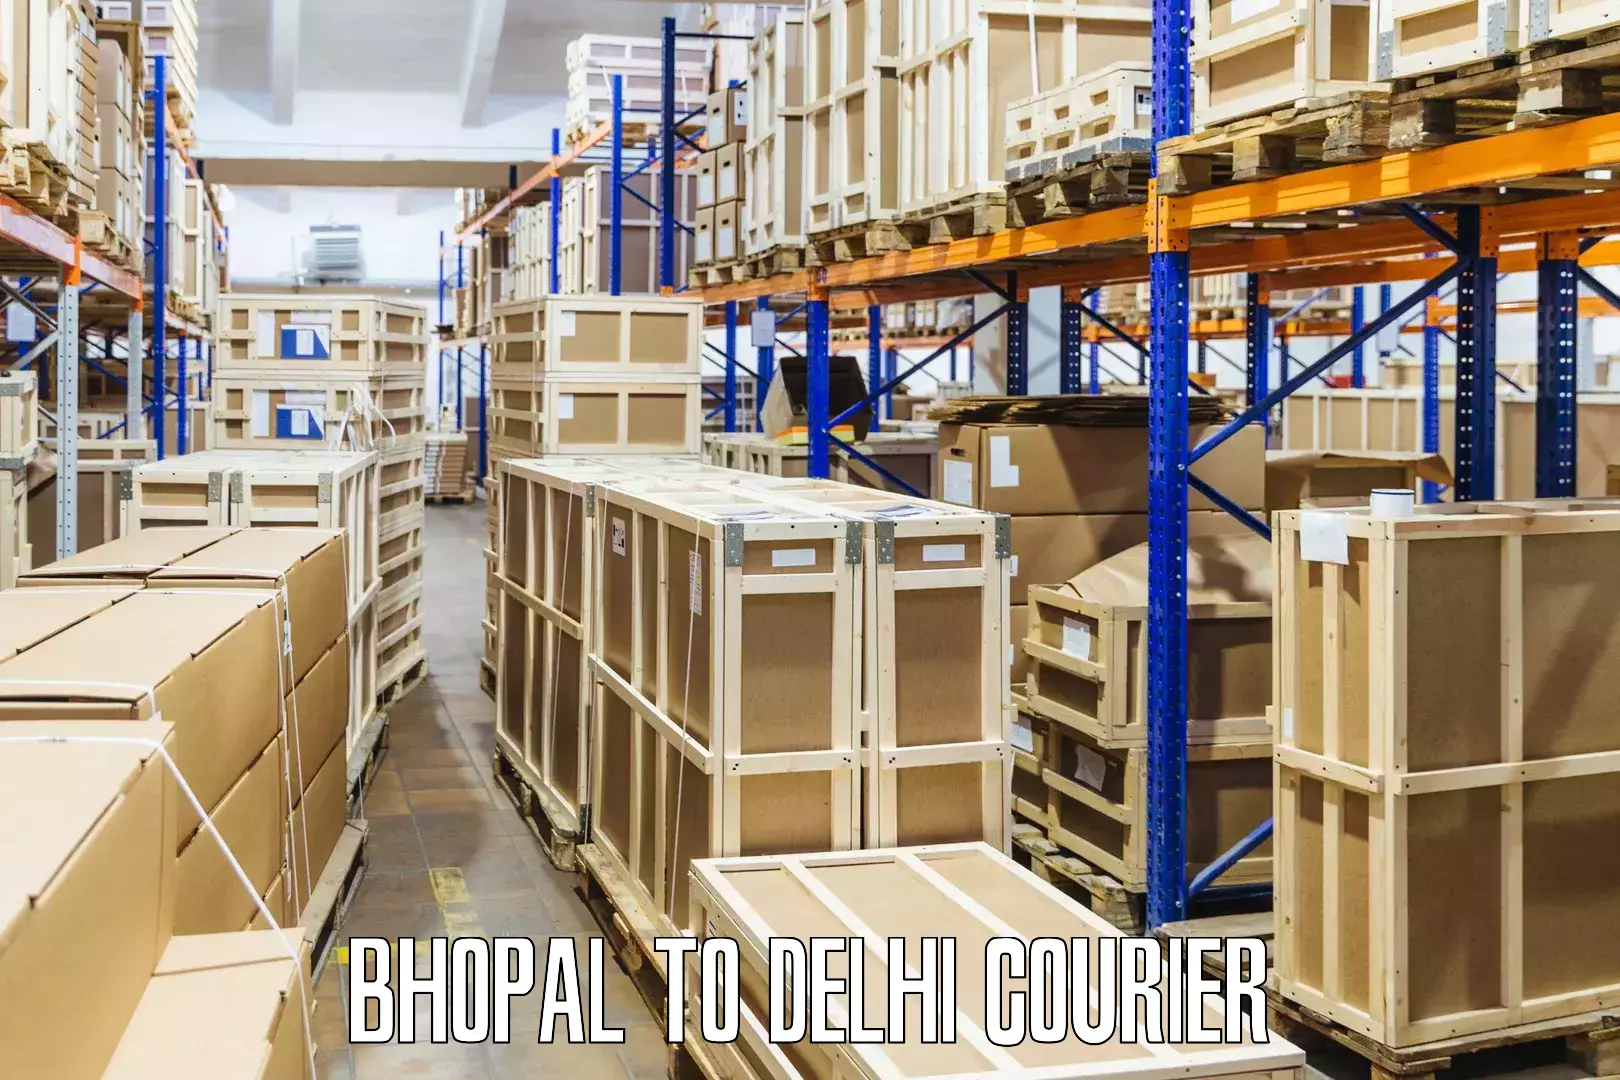 Urban courier service Bhopal to Delhi